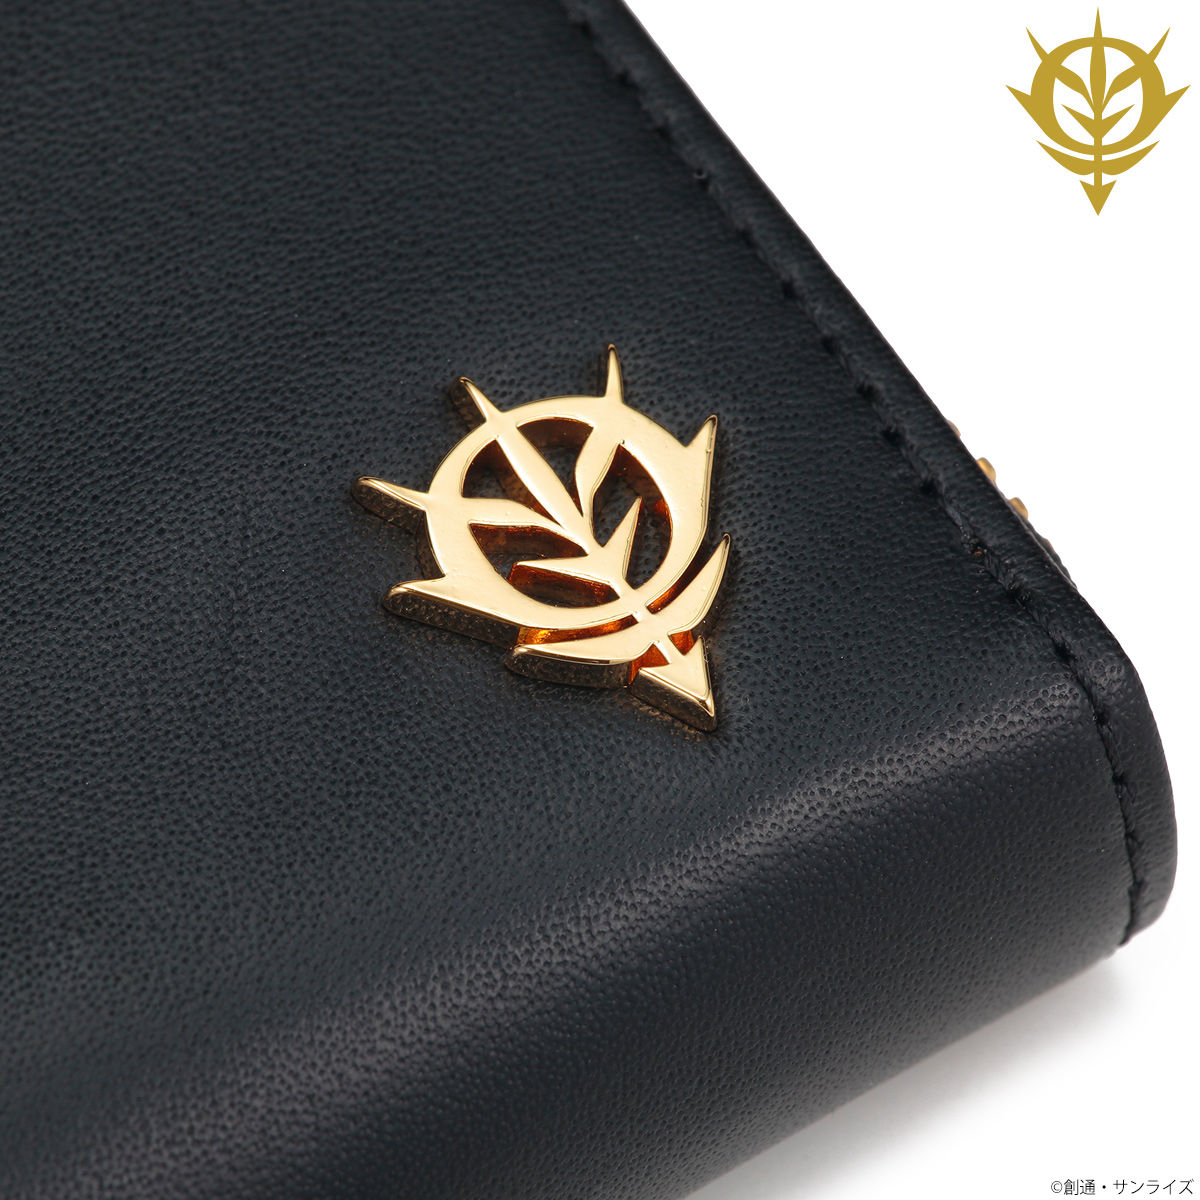 Mobile Suit Gundam Zeon Golden Emblem Long Wallet